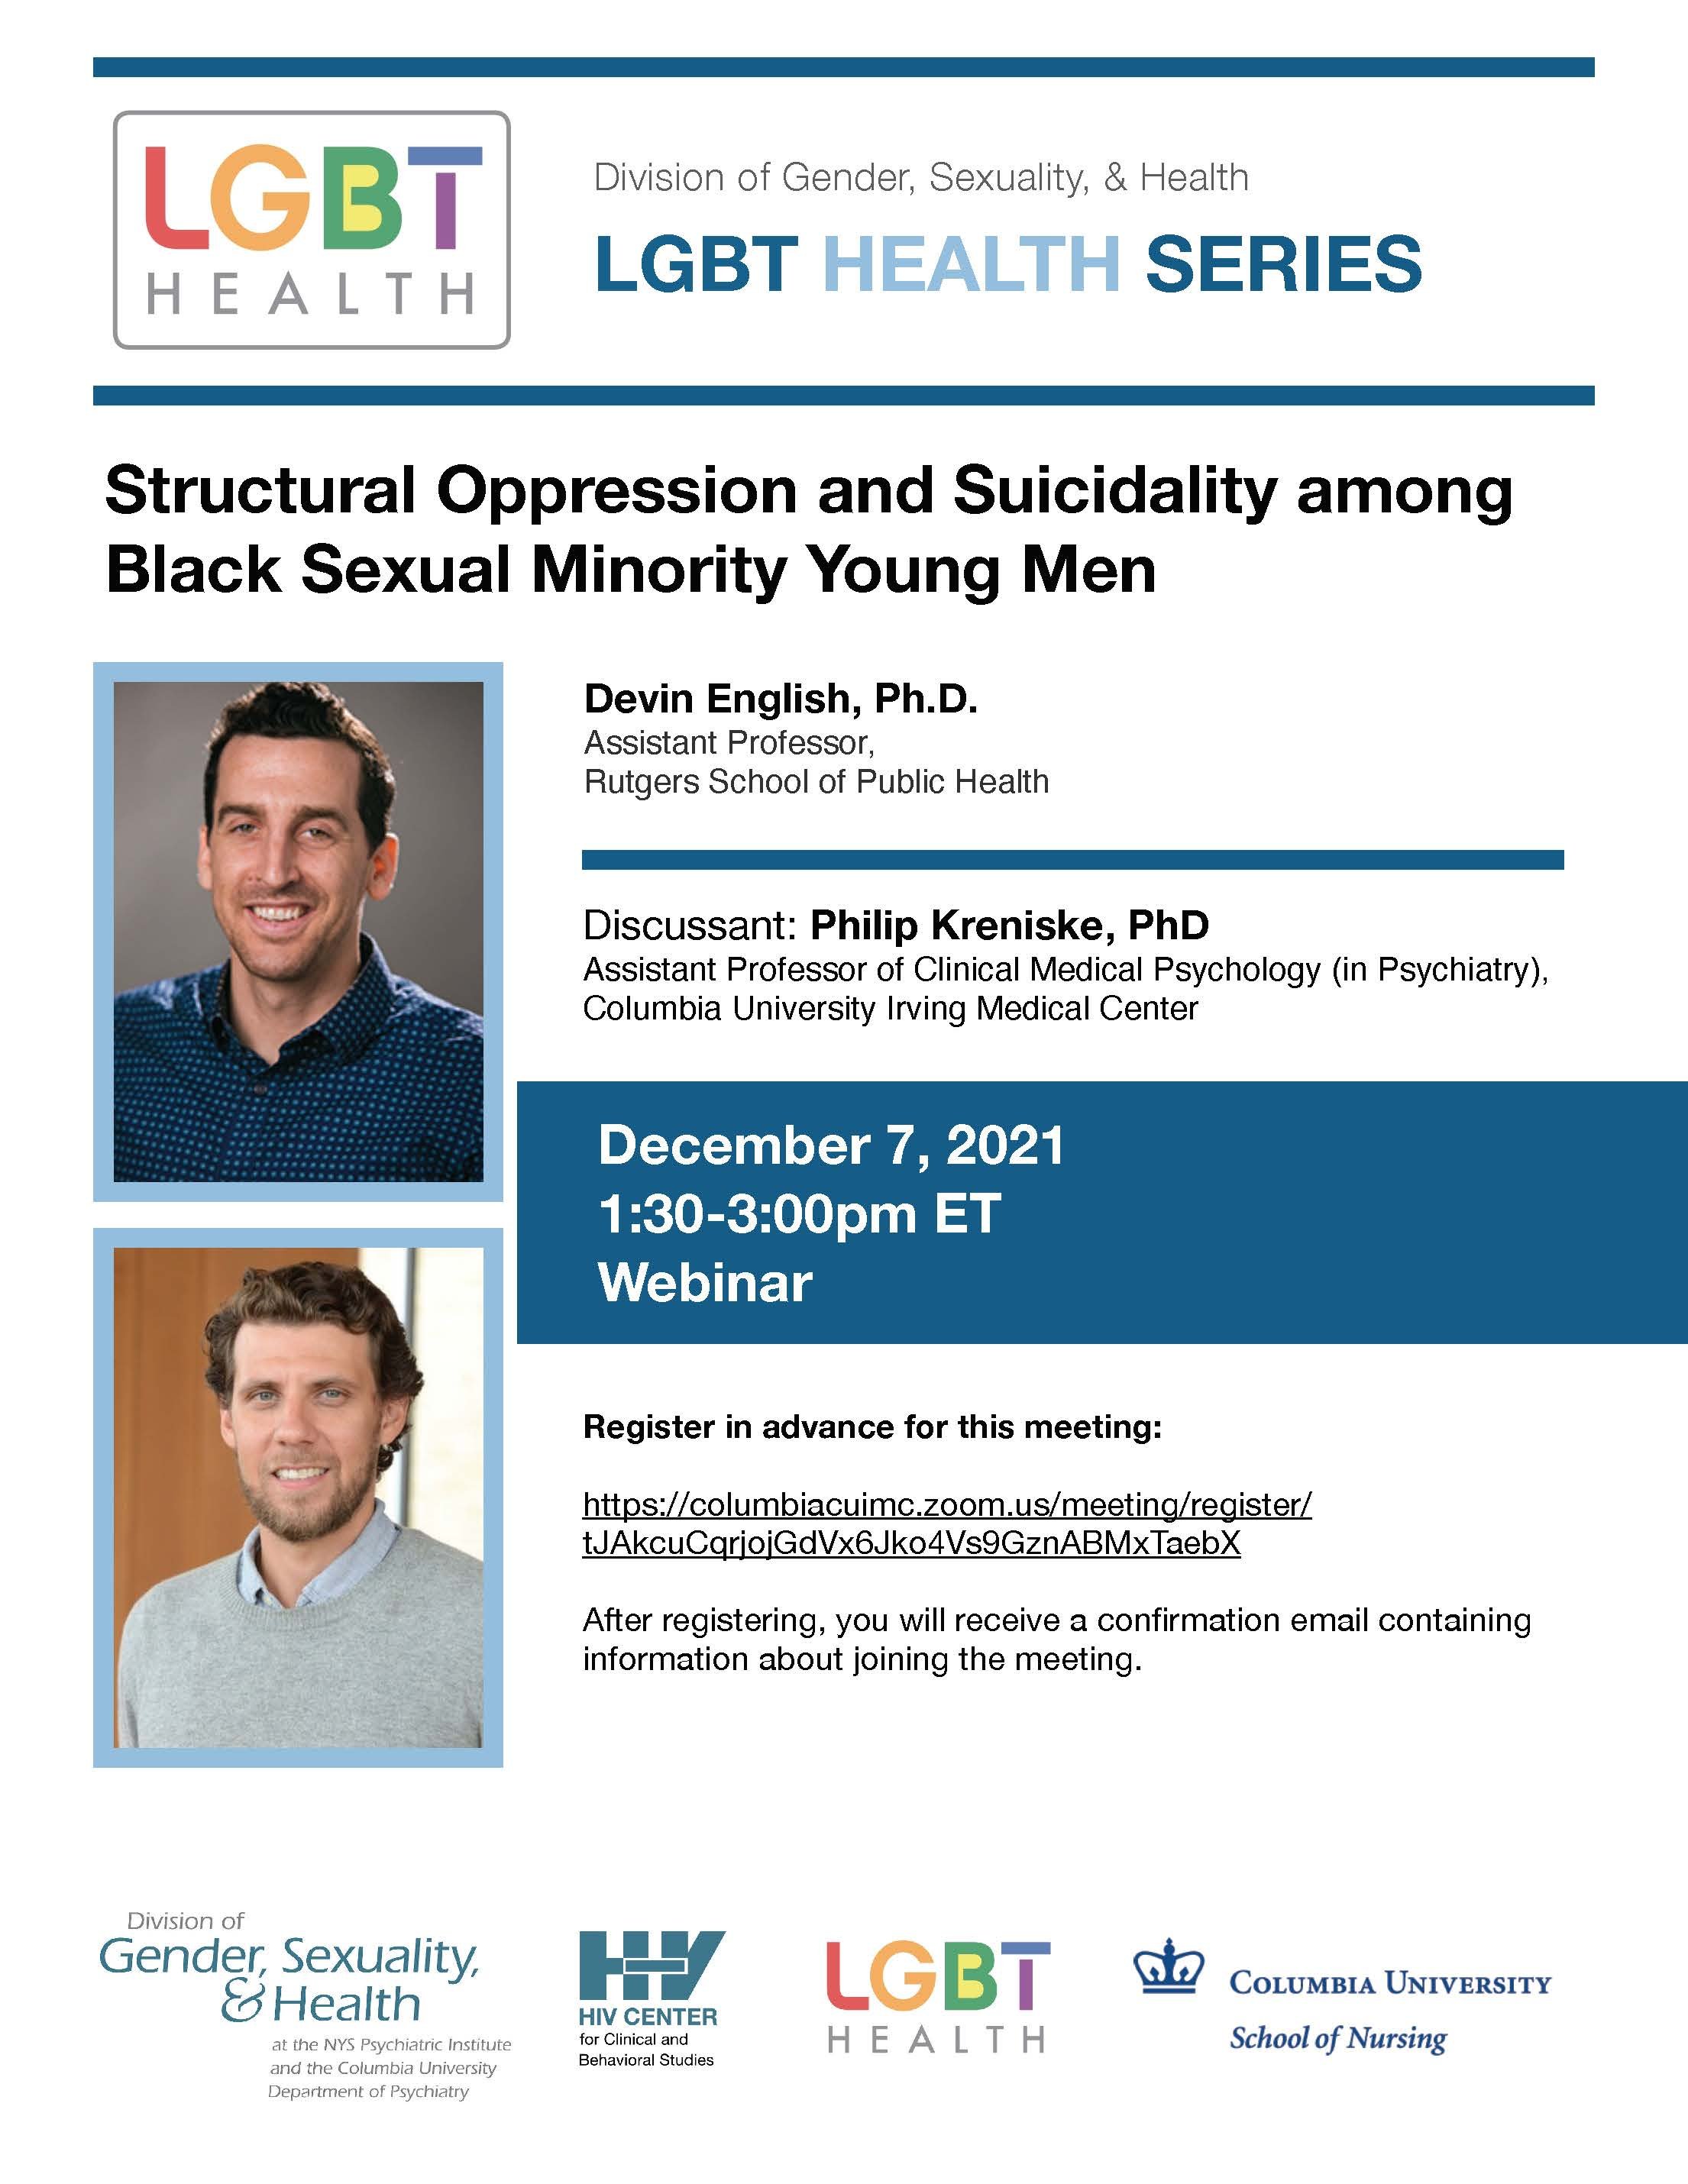 Dec 7 2021 LGBT Health.jpg